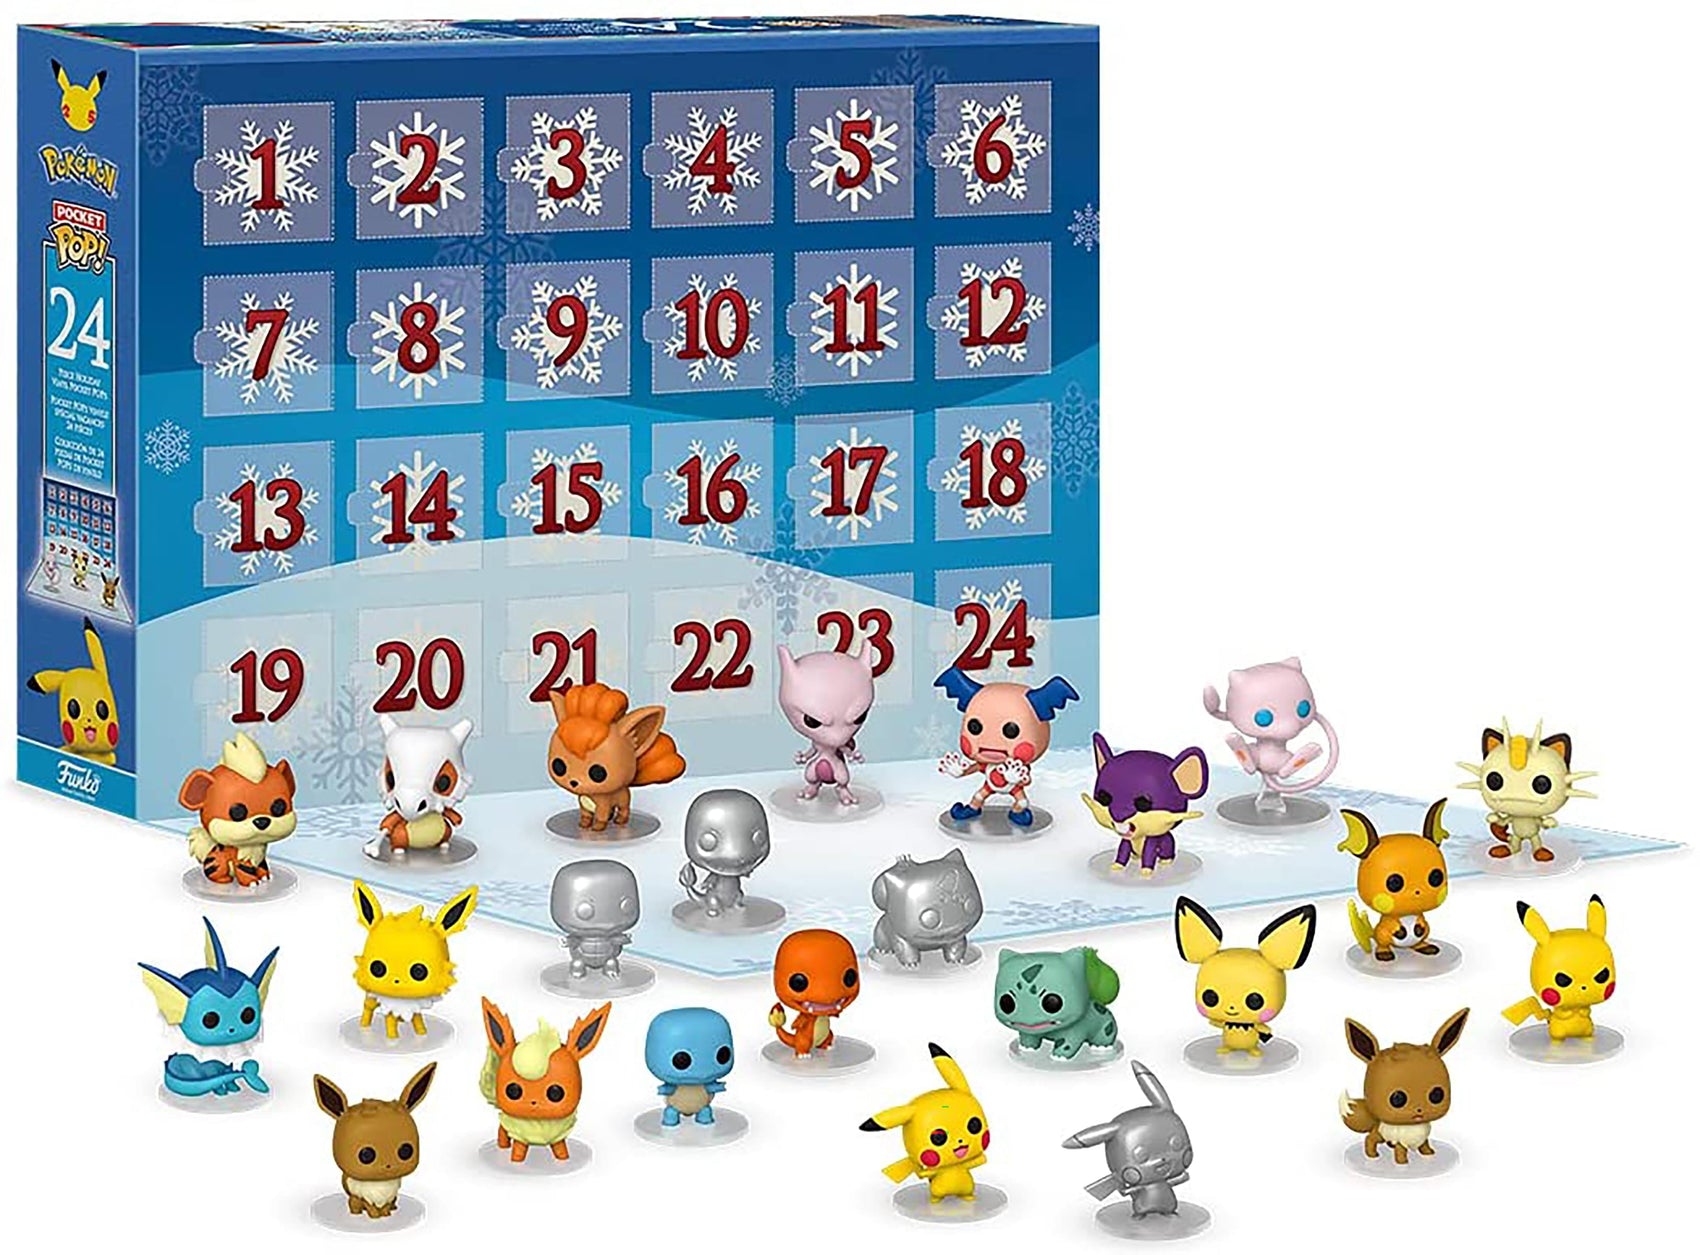 Pokemon Funko POP Advent Calendar 24 Pieces Free Shipping